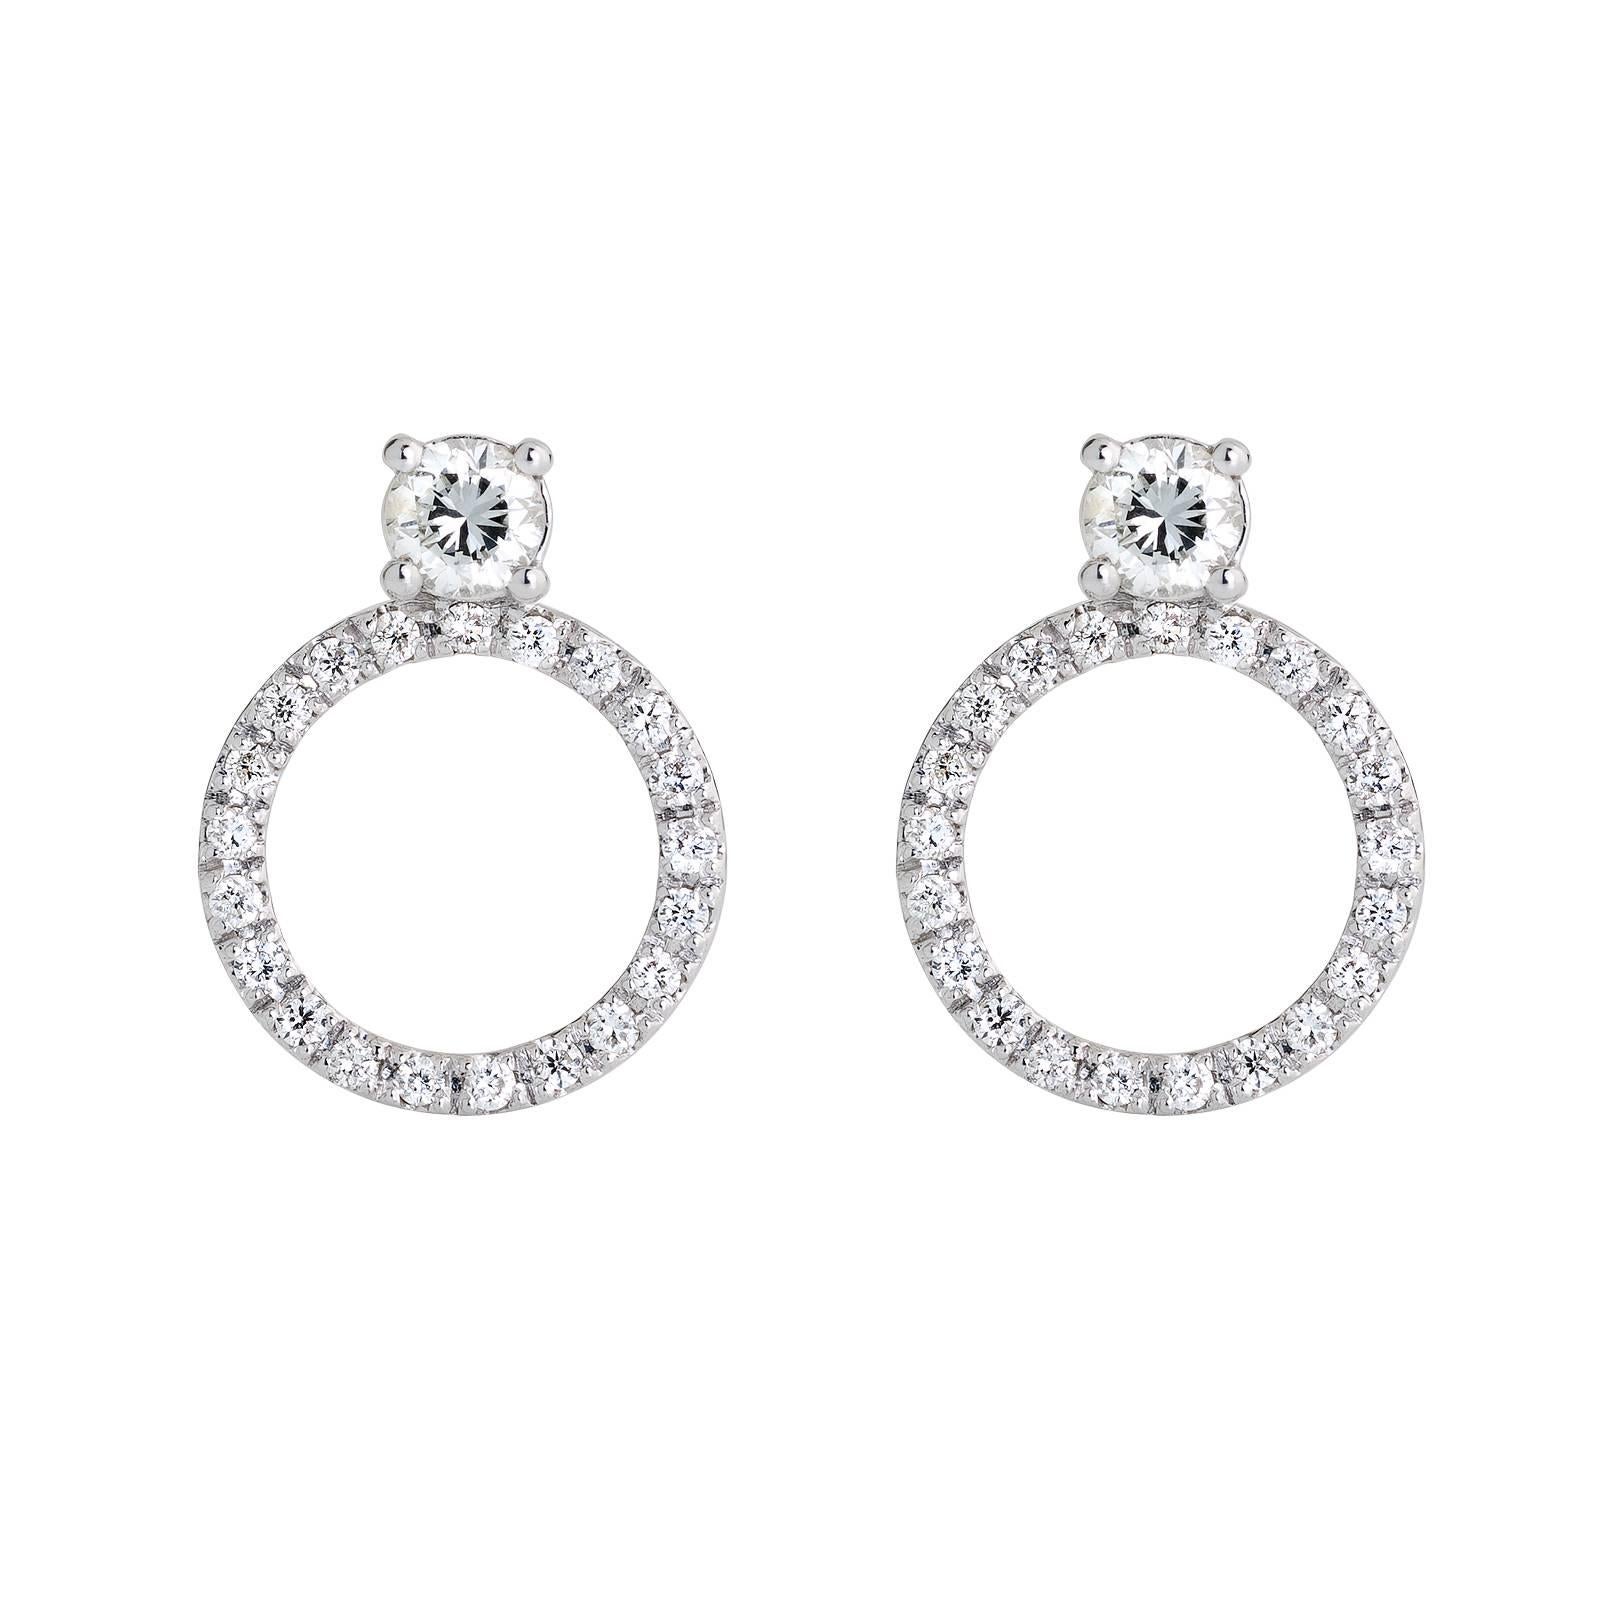 18 Karat White Gold with 44 White Diamonds 0.66 Carat Round Stud Earring Set For Sale